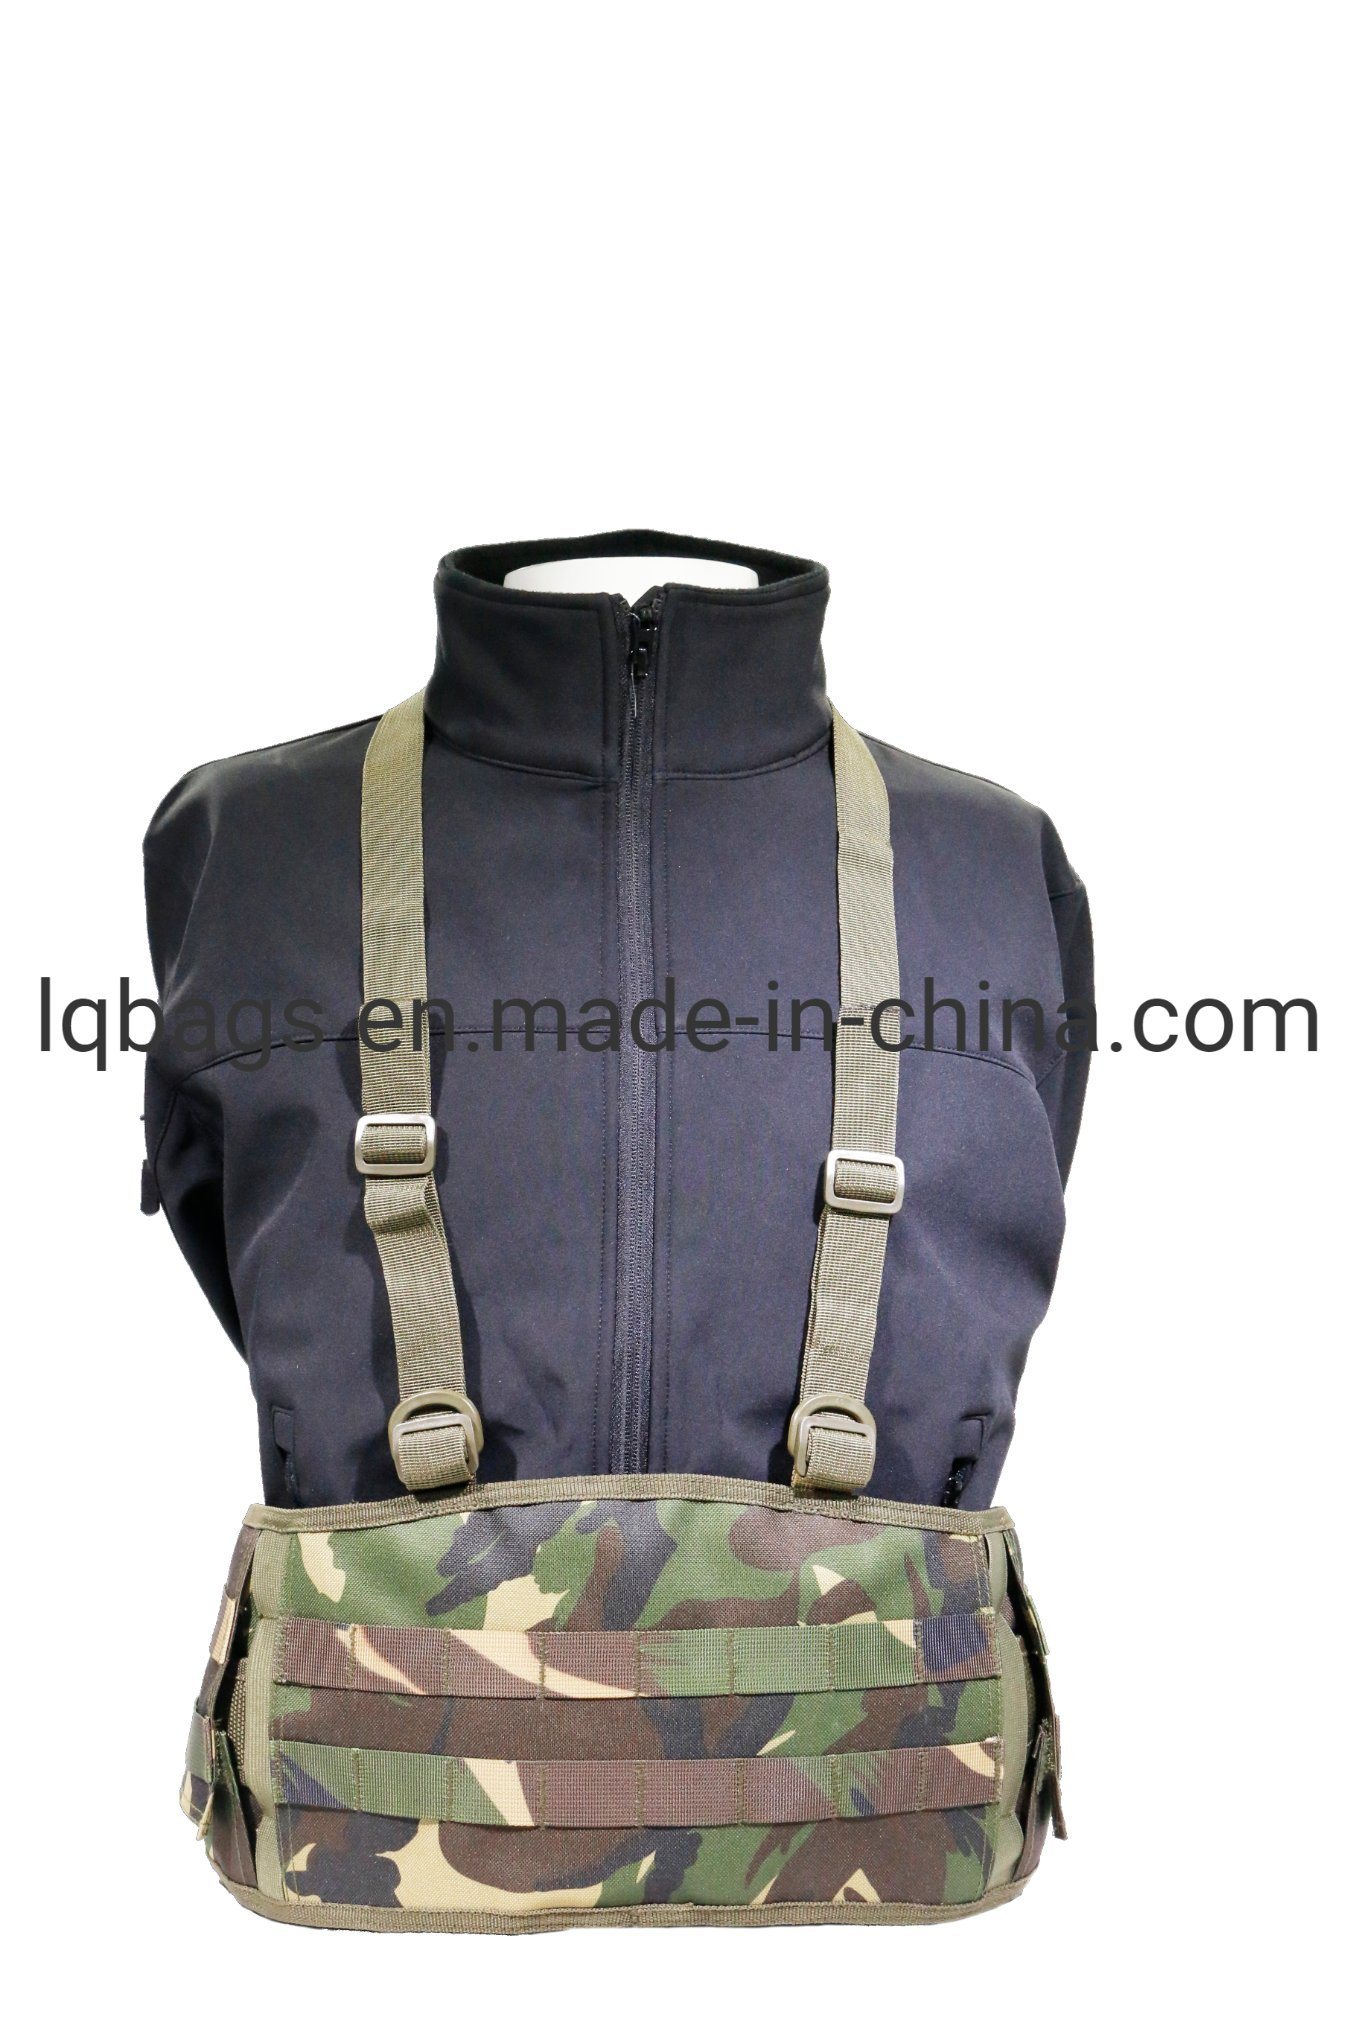 Tactical Molle H Harness Suspender Battle Belt Chest Rig